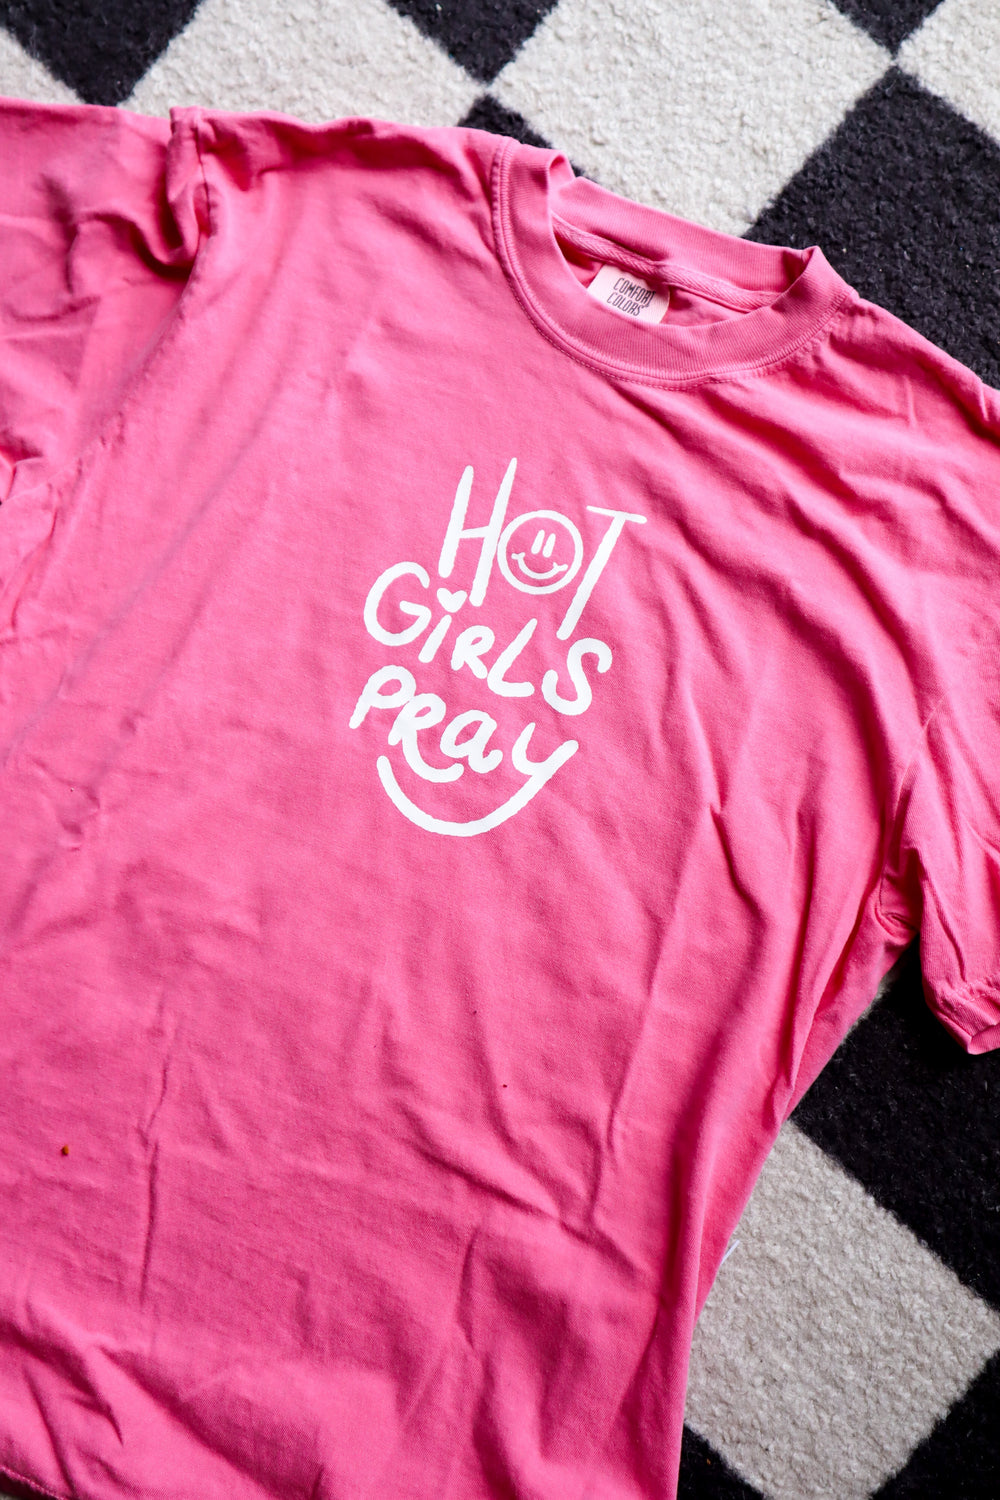 Hot Girls Pray T-Shirt